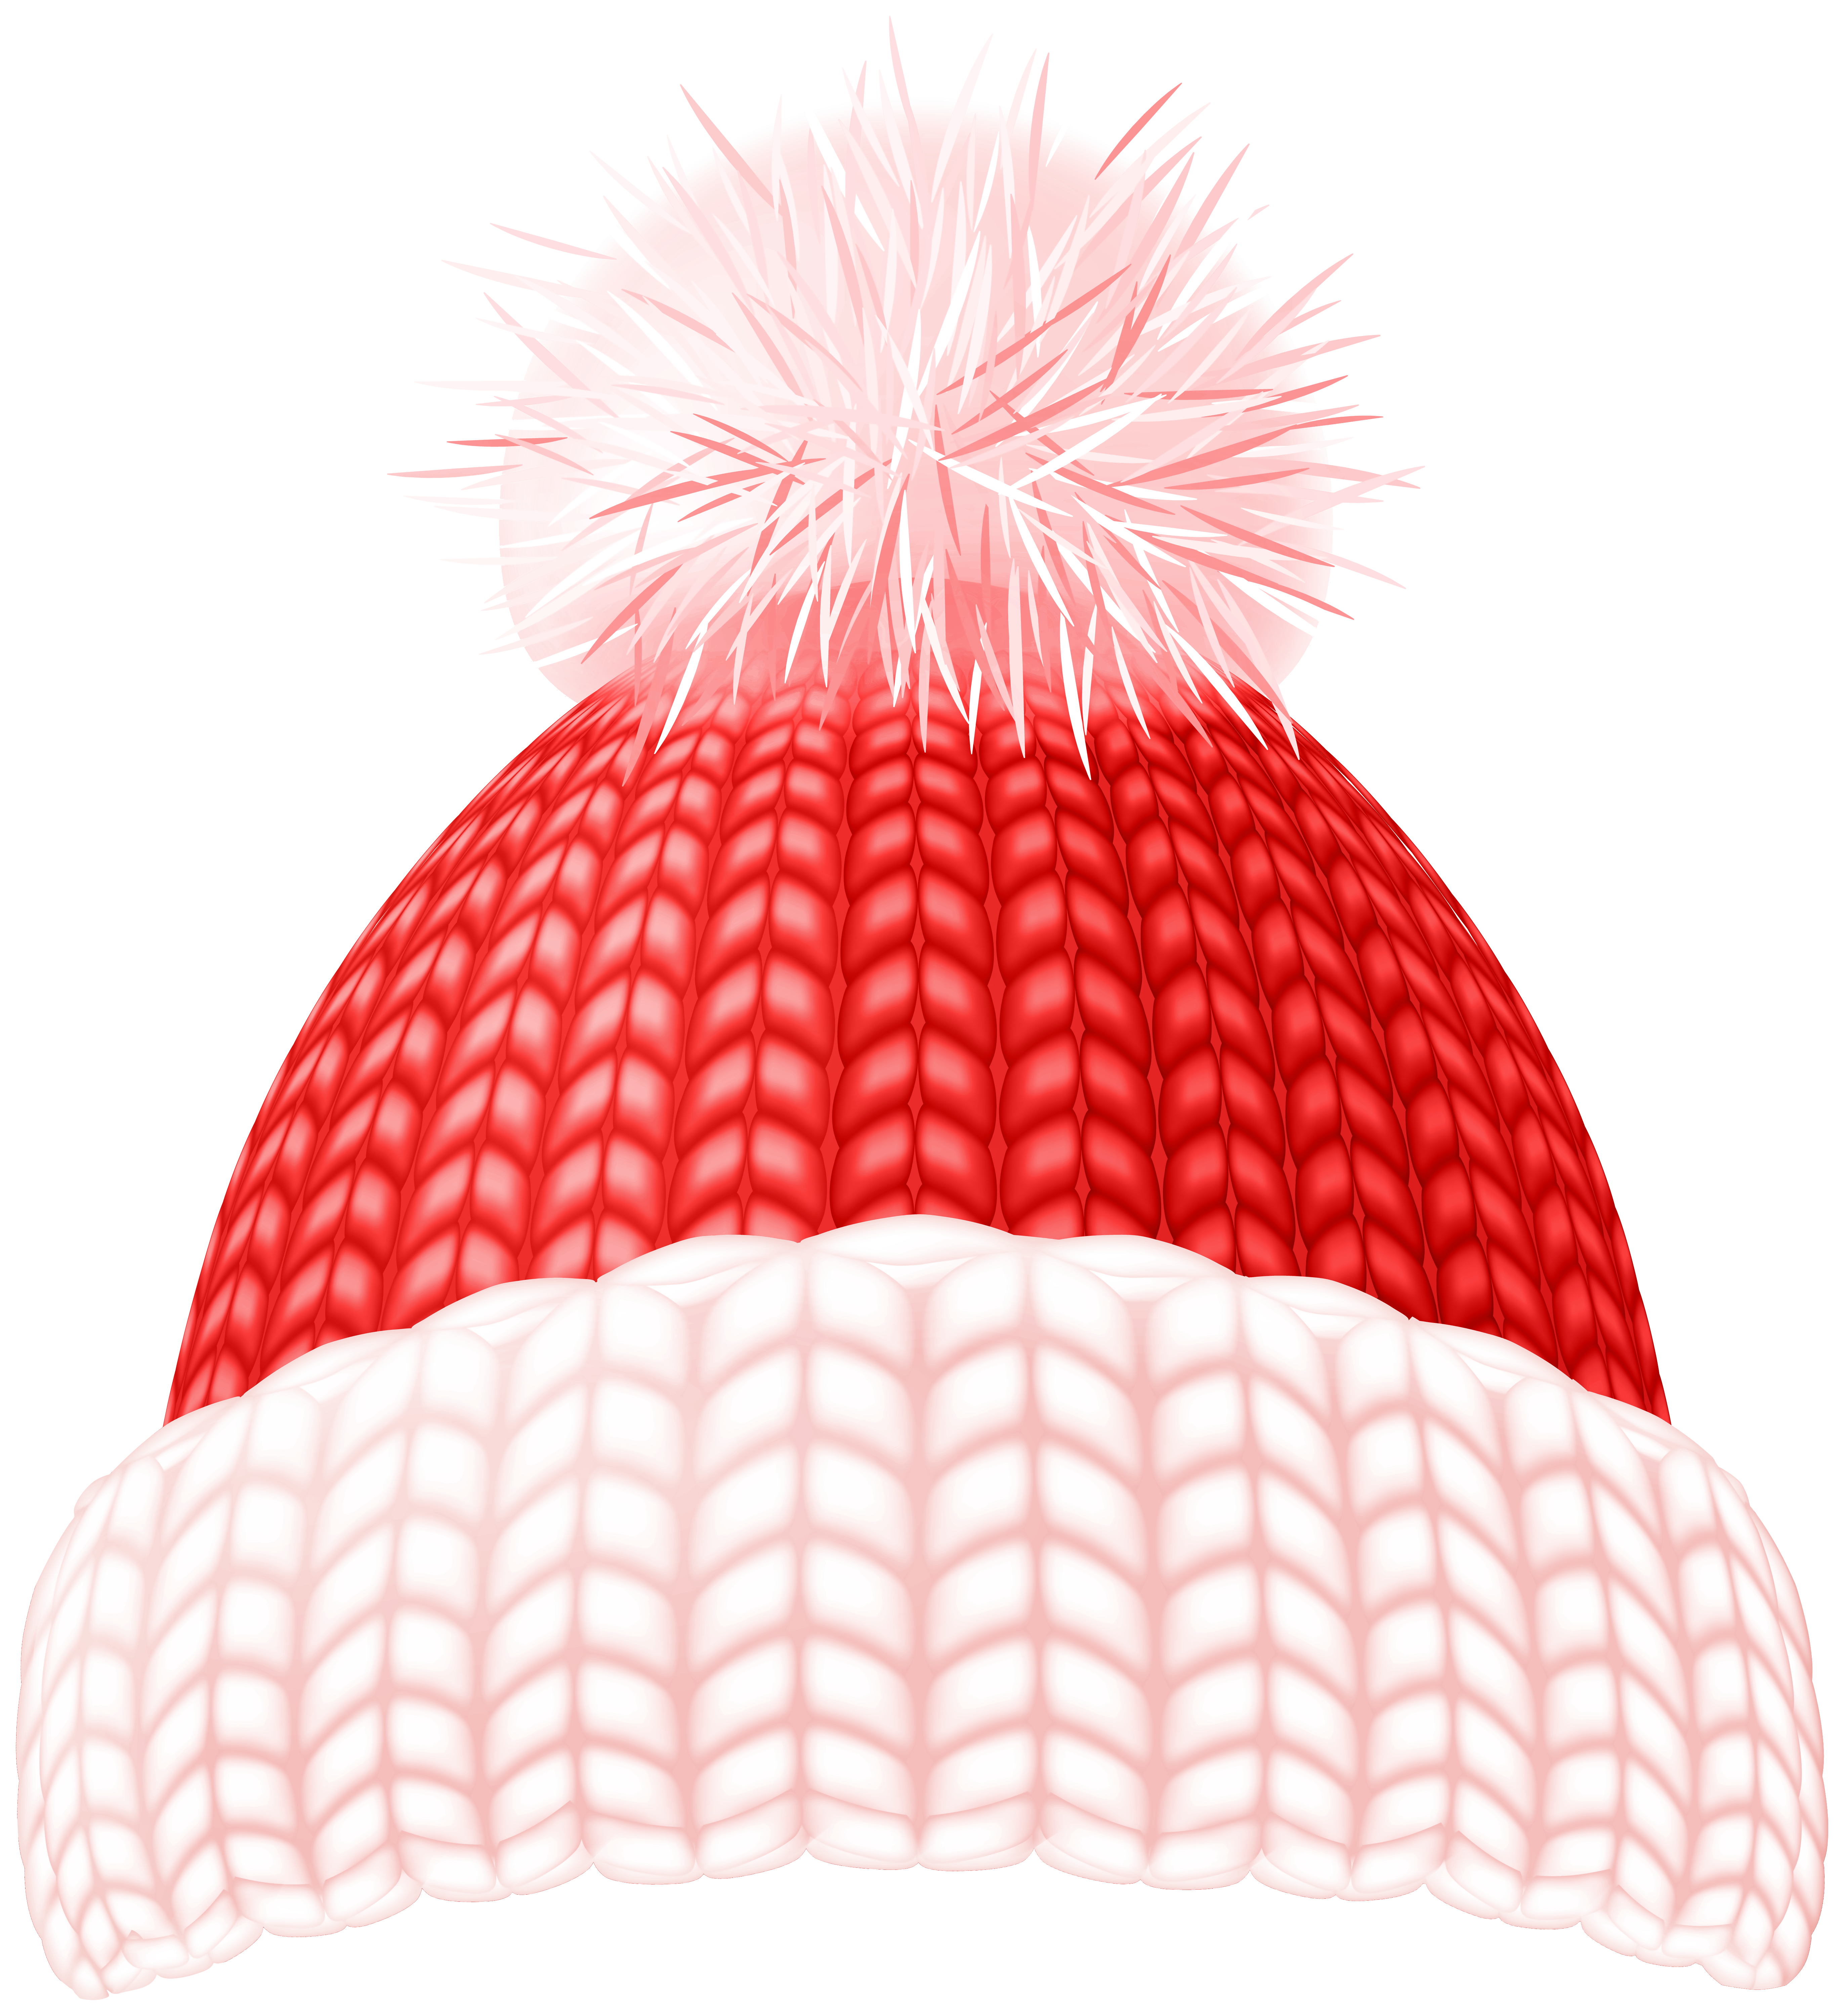 hats clipart winter